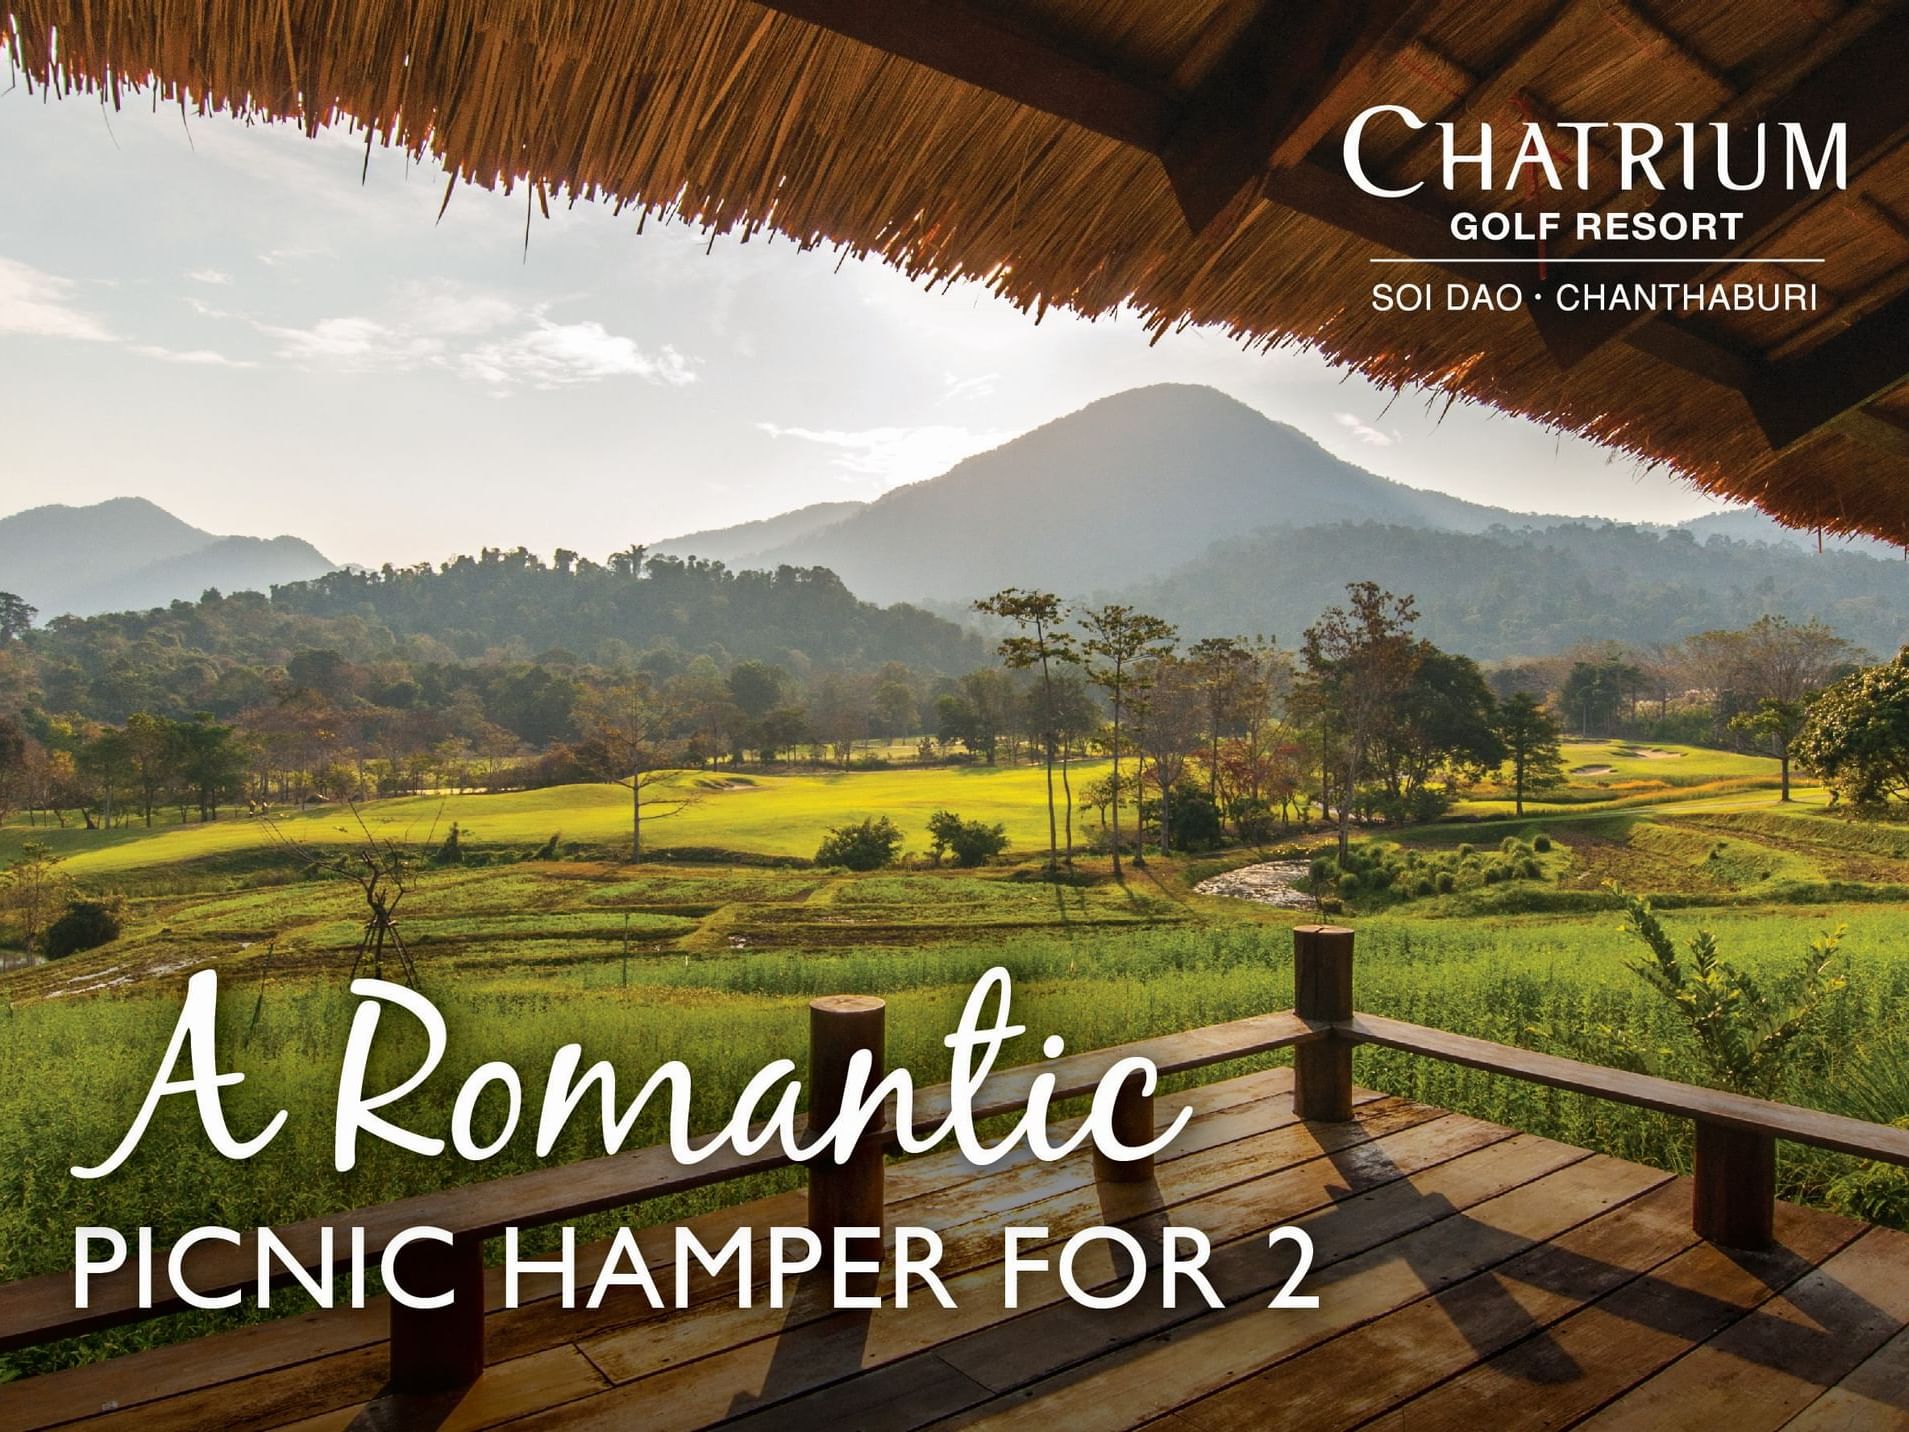 Banner about a Romantic Picnic Hamper at Chatrium Golf Resort